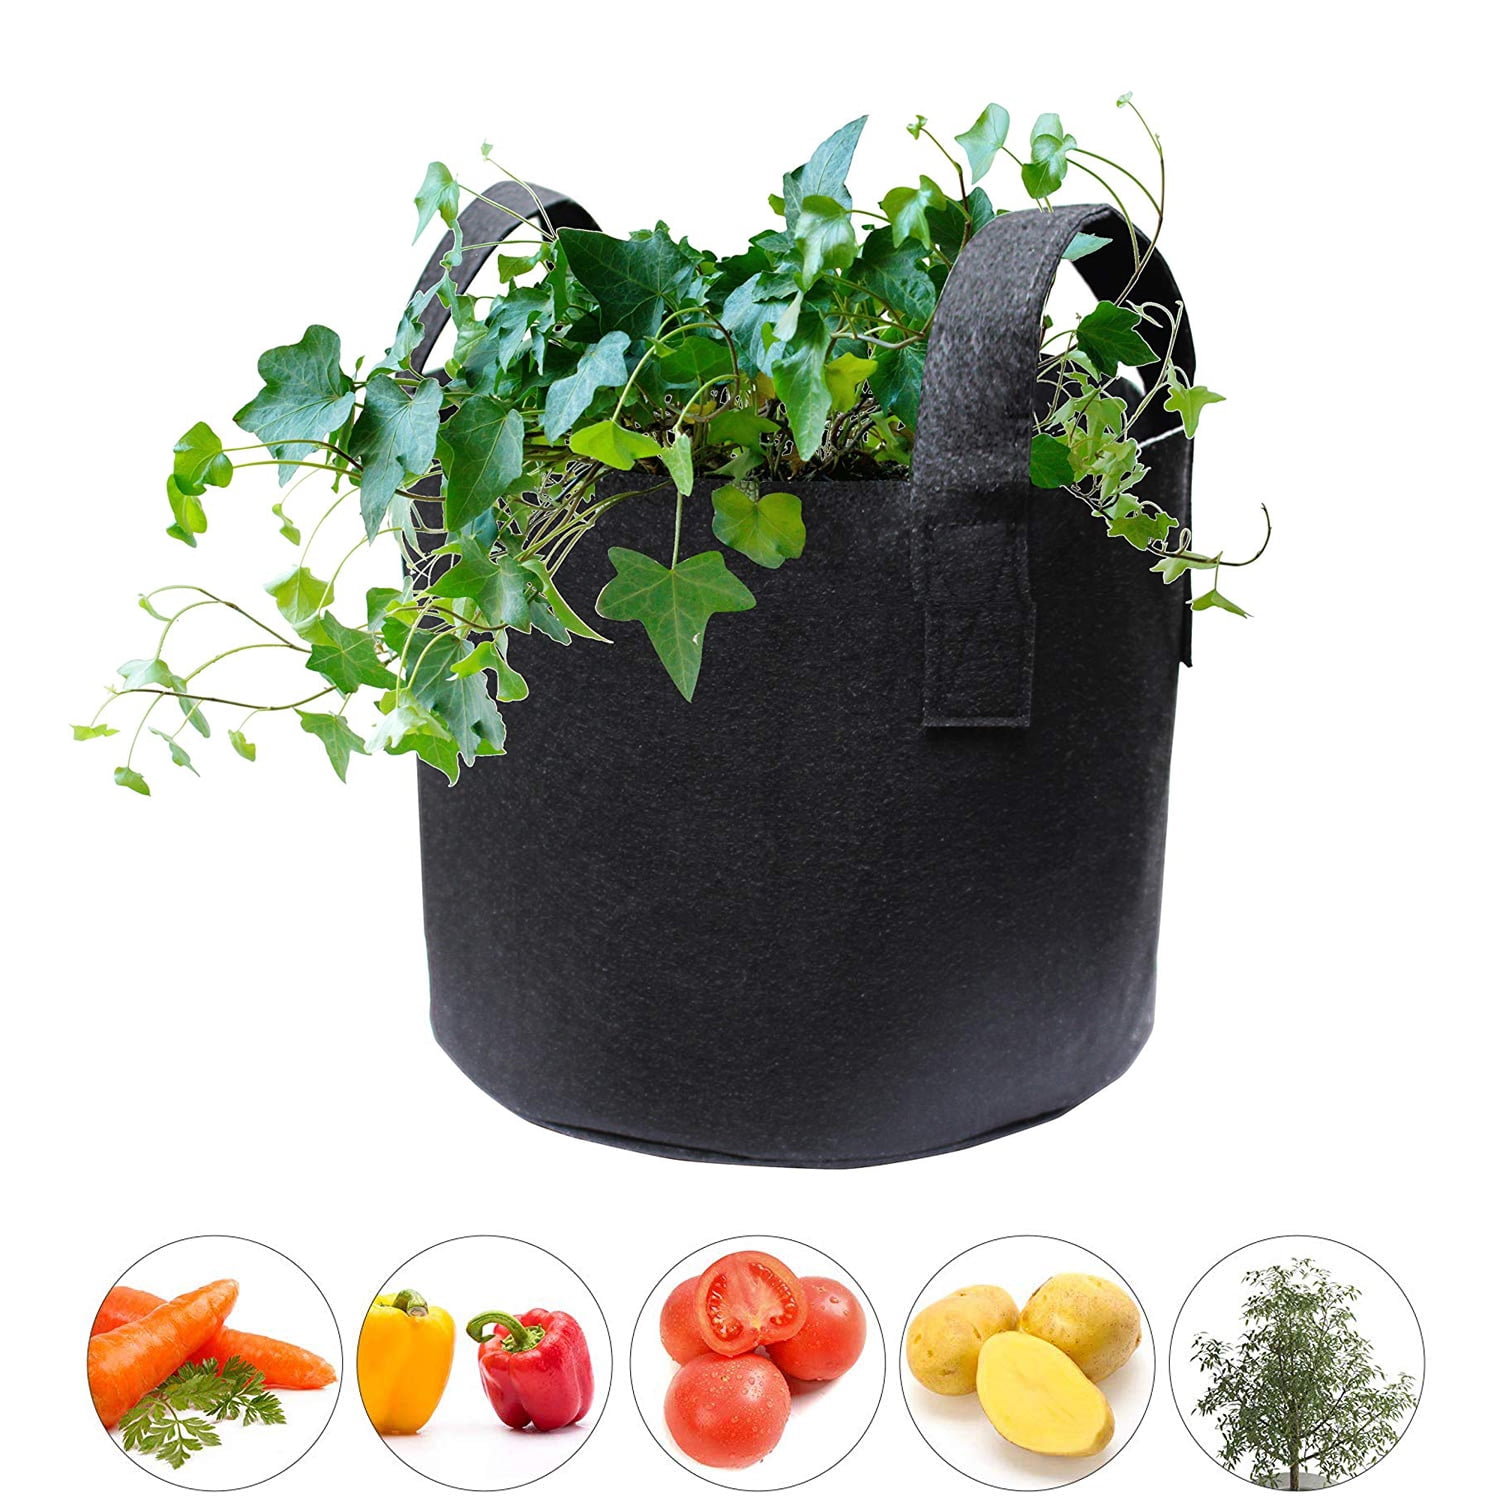 5X Fabric Grow Bag Plant Pot Planter Grow Sack Spuds Patio 5 Gallon With Handles 